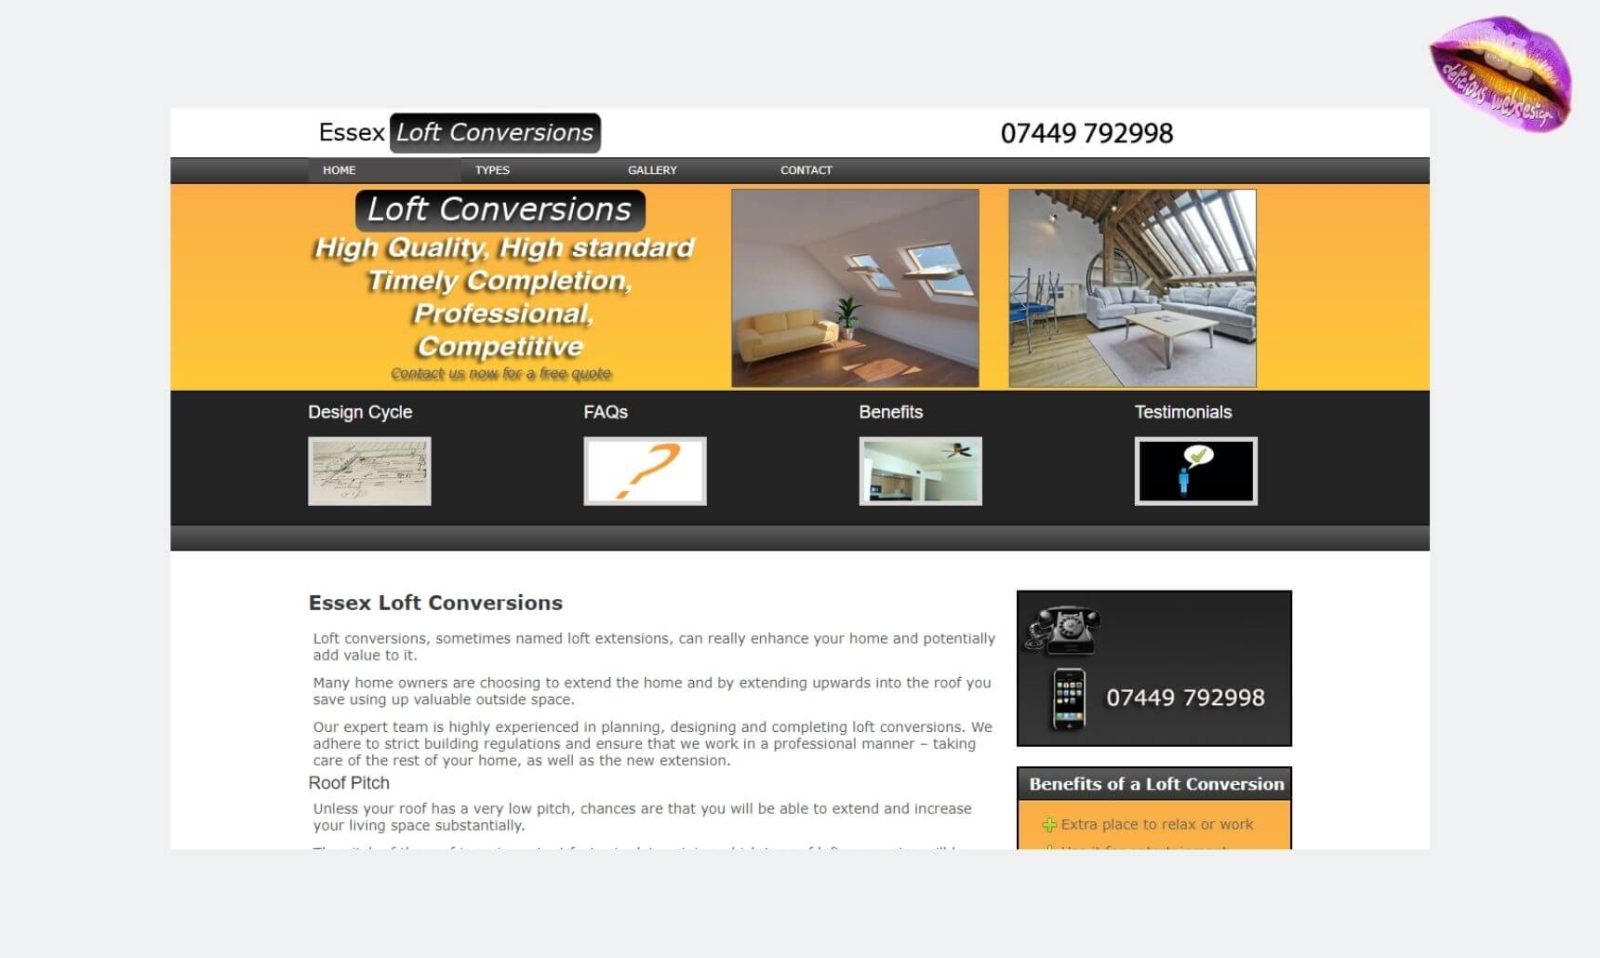 Loft Conversions Essex